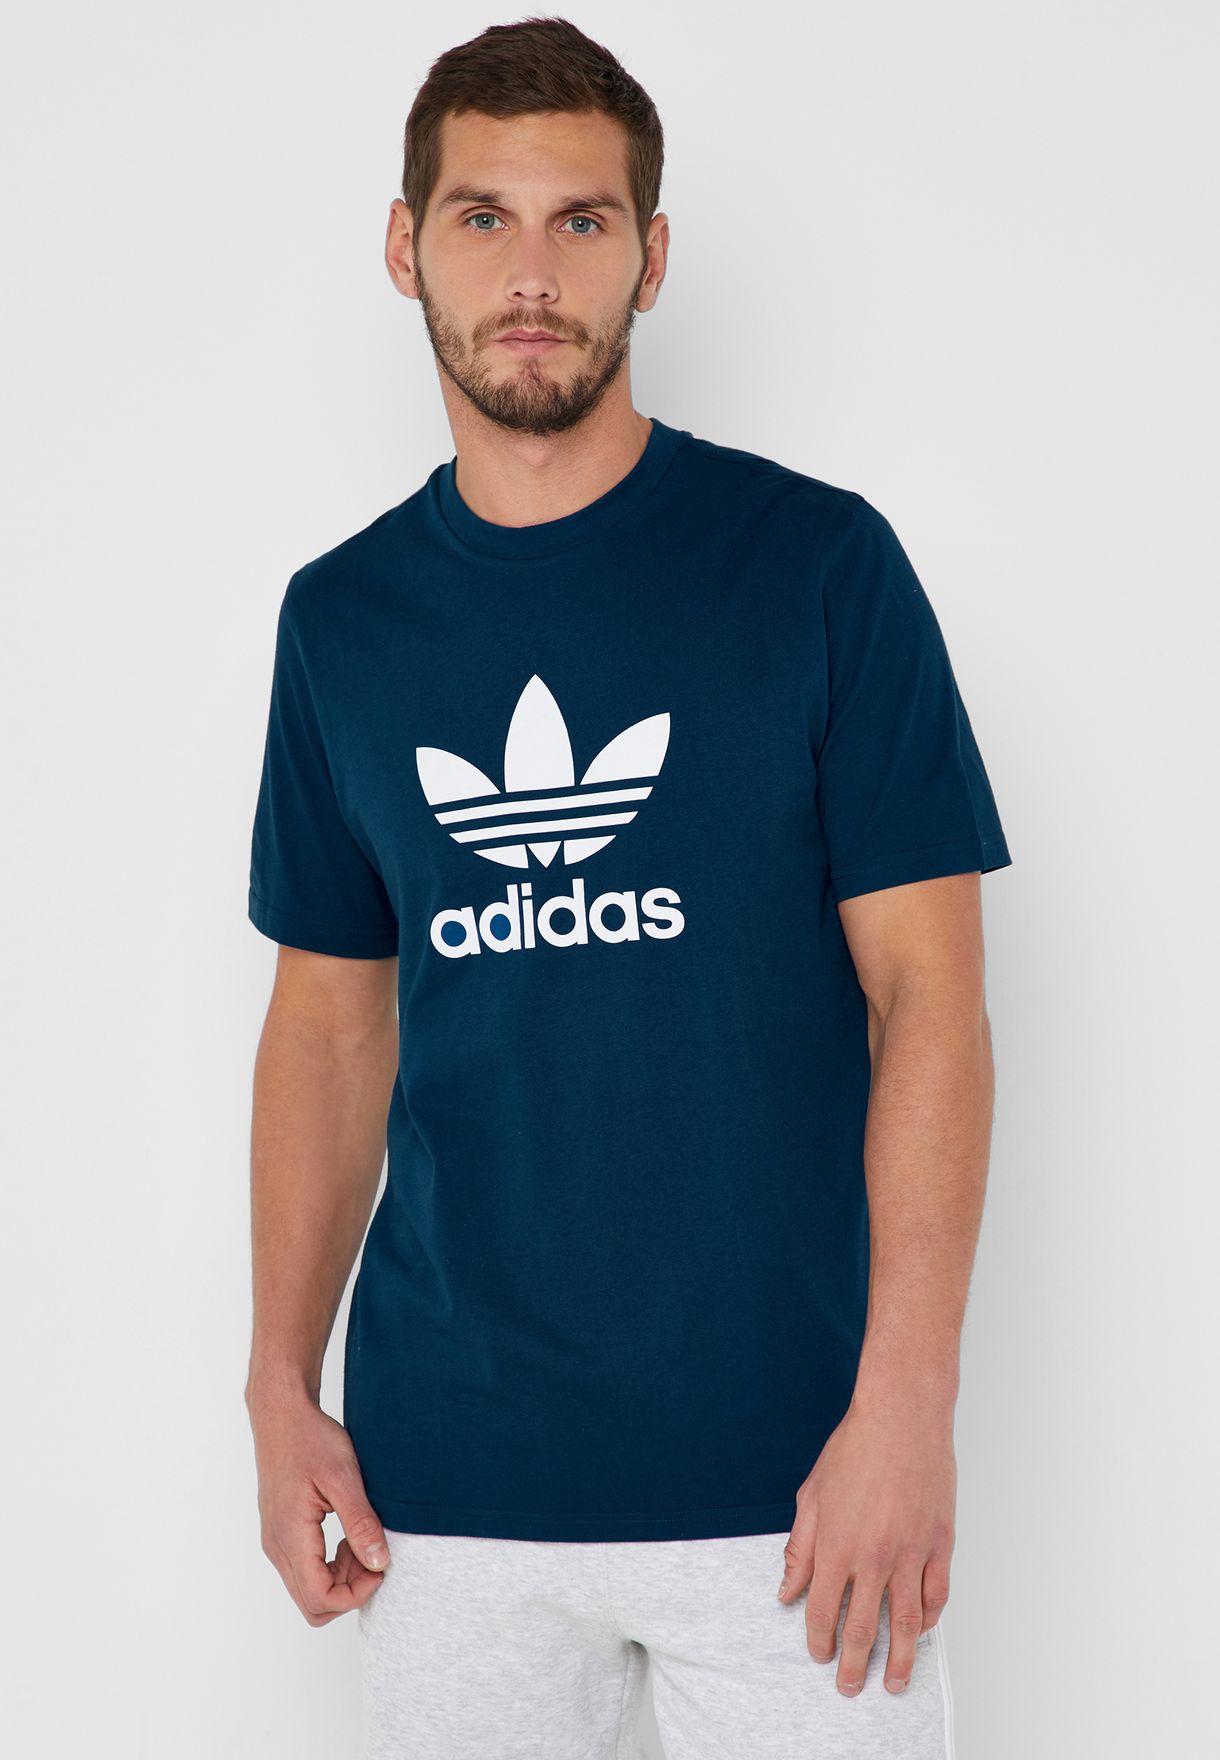 adidas blue trefoil t shirt